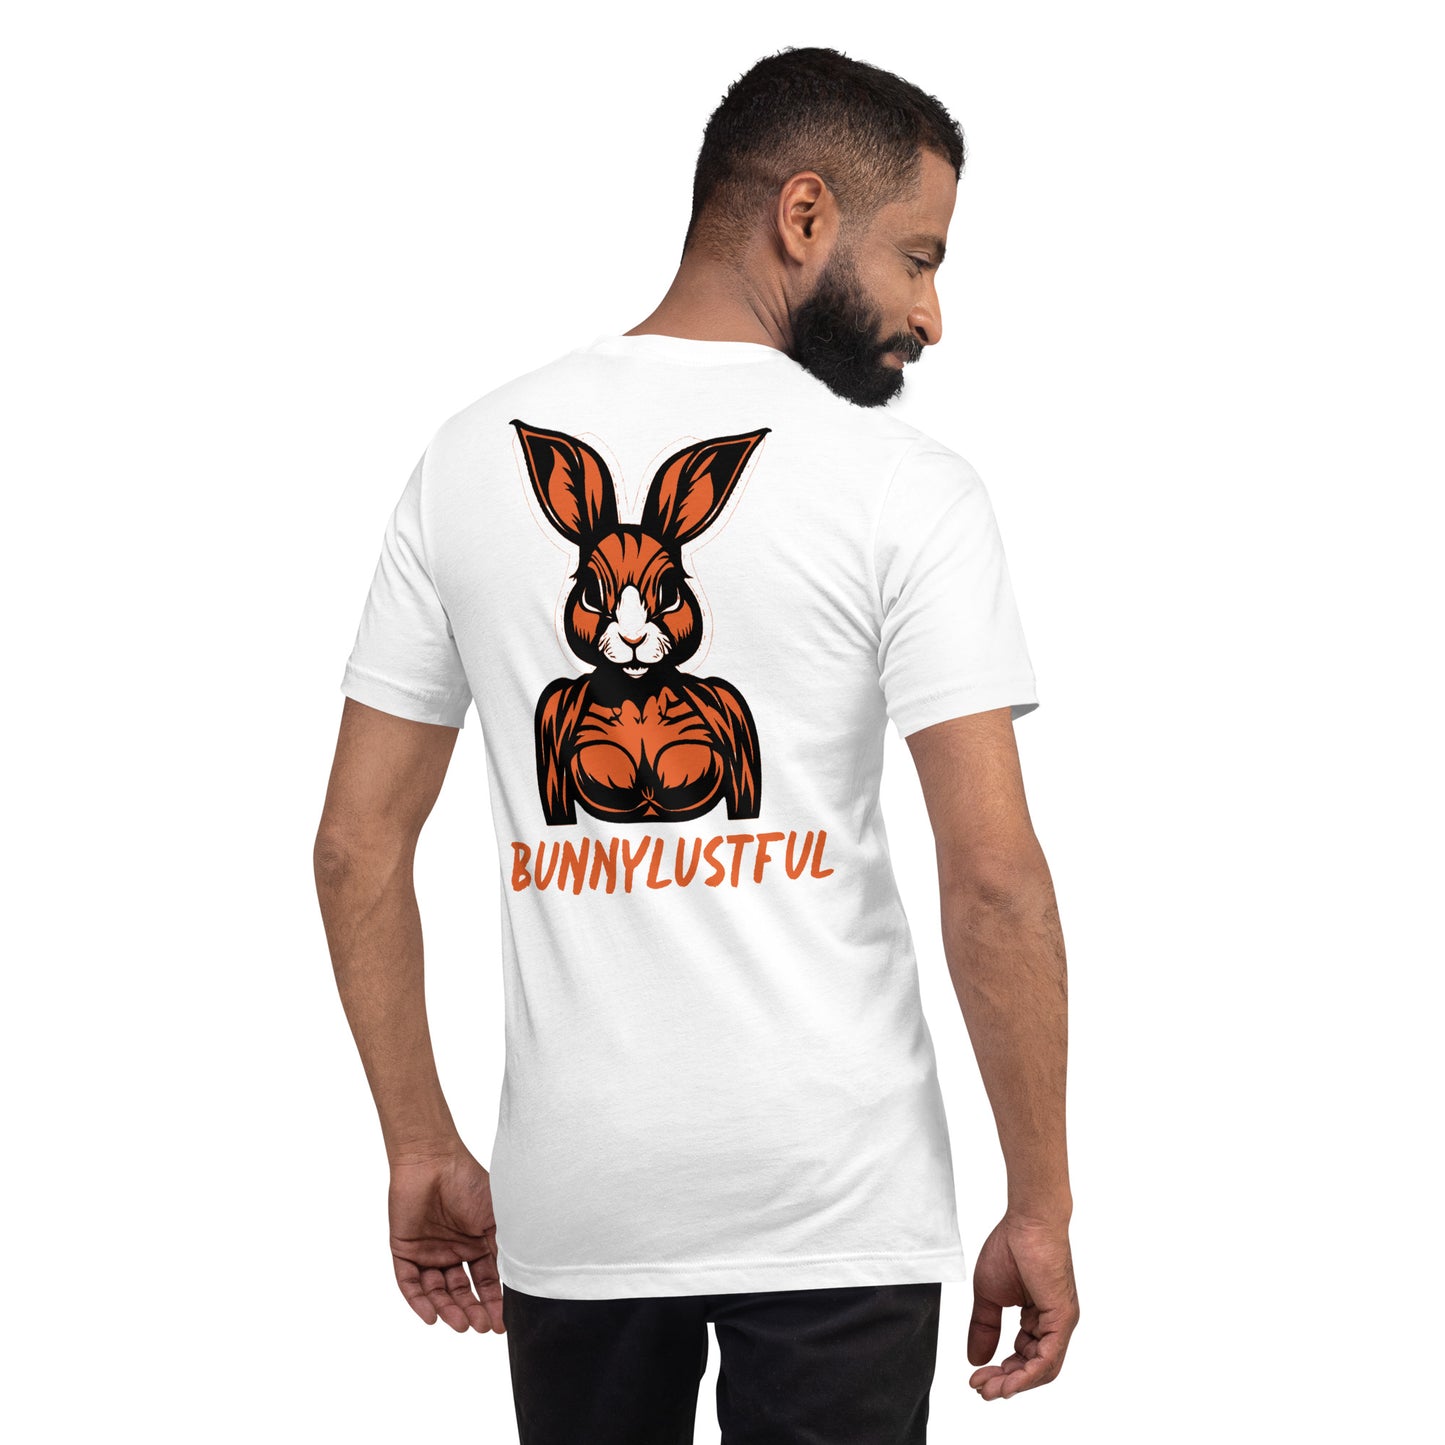 "Bunnylustful" t-shirt